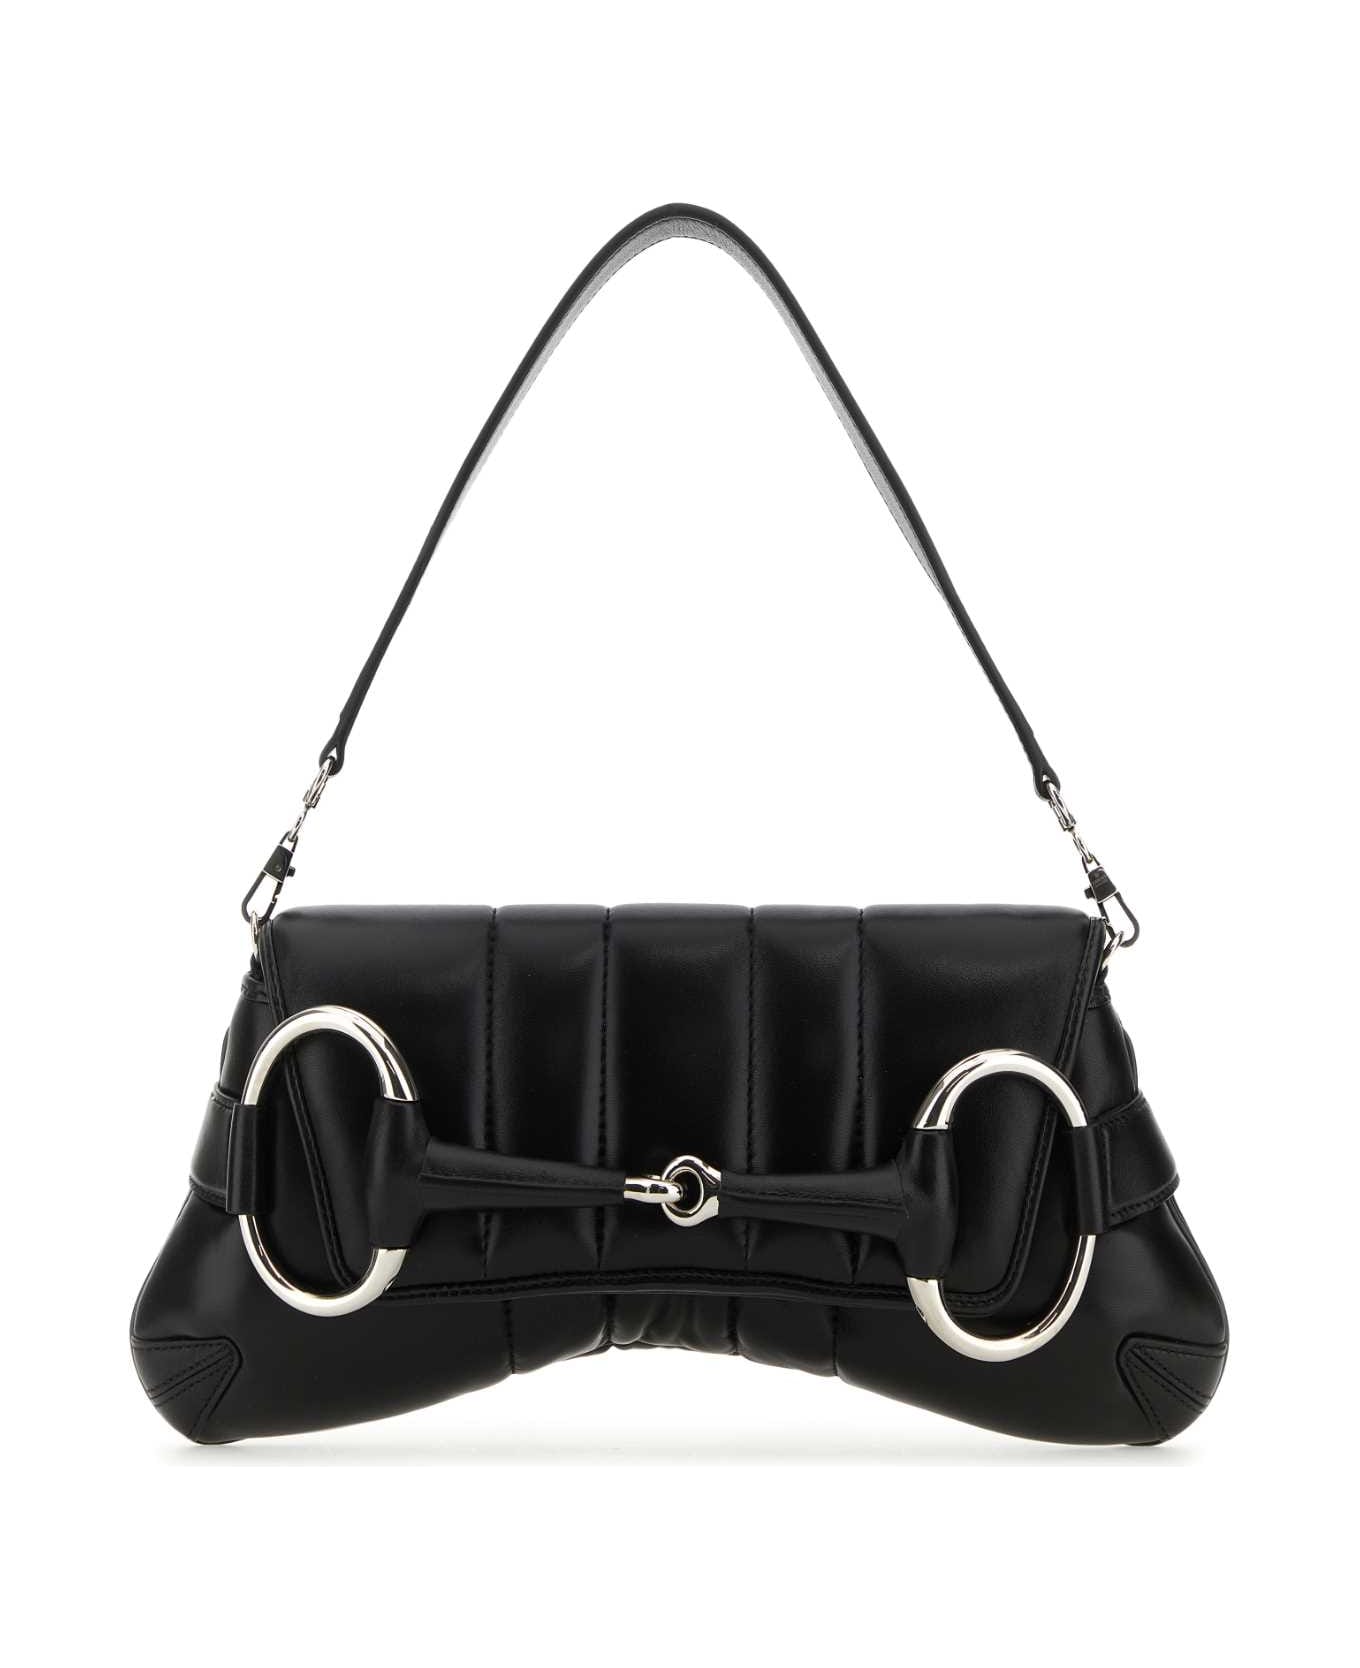 Gucci Black Medium Gucci Horsebit Chain Leather Shoulder Bag - 1000 トートバッグ